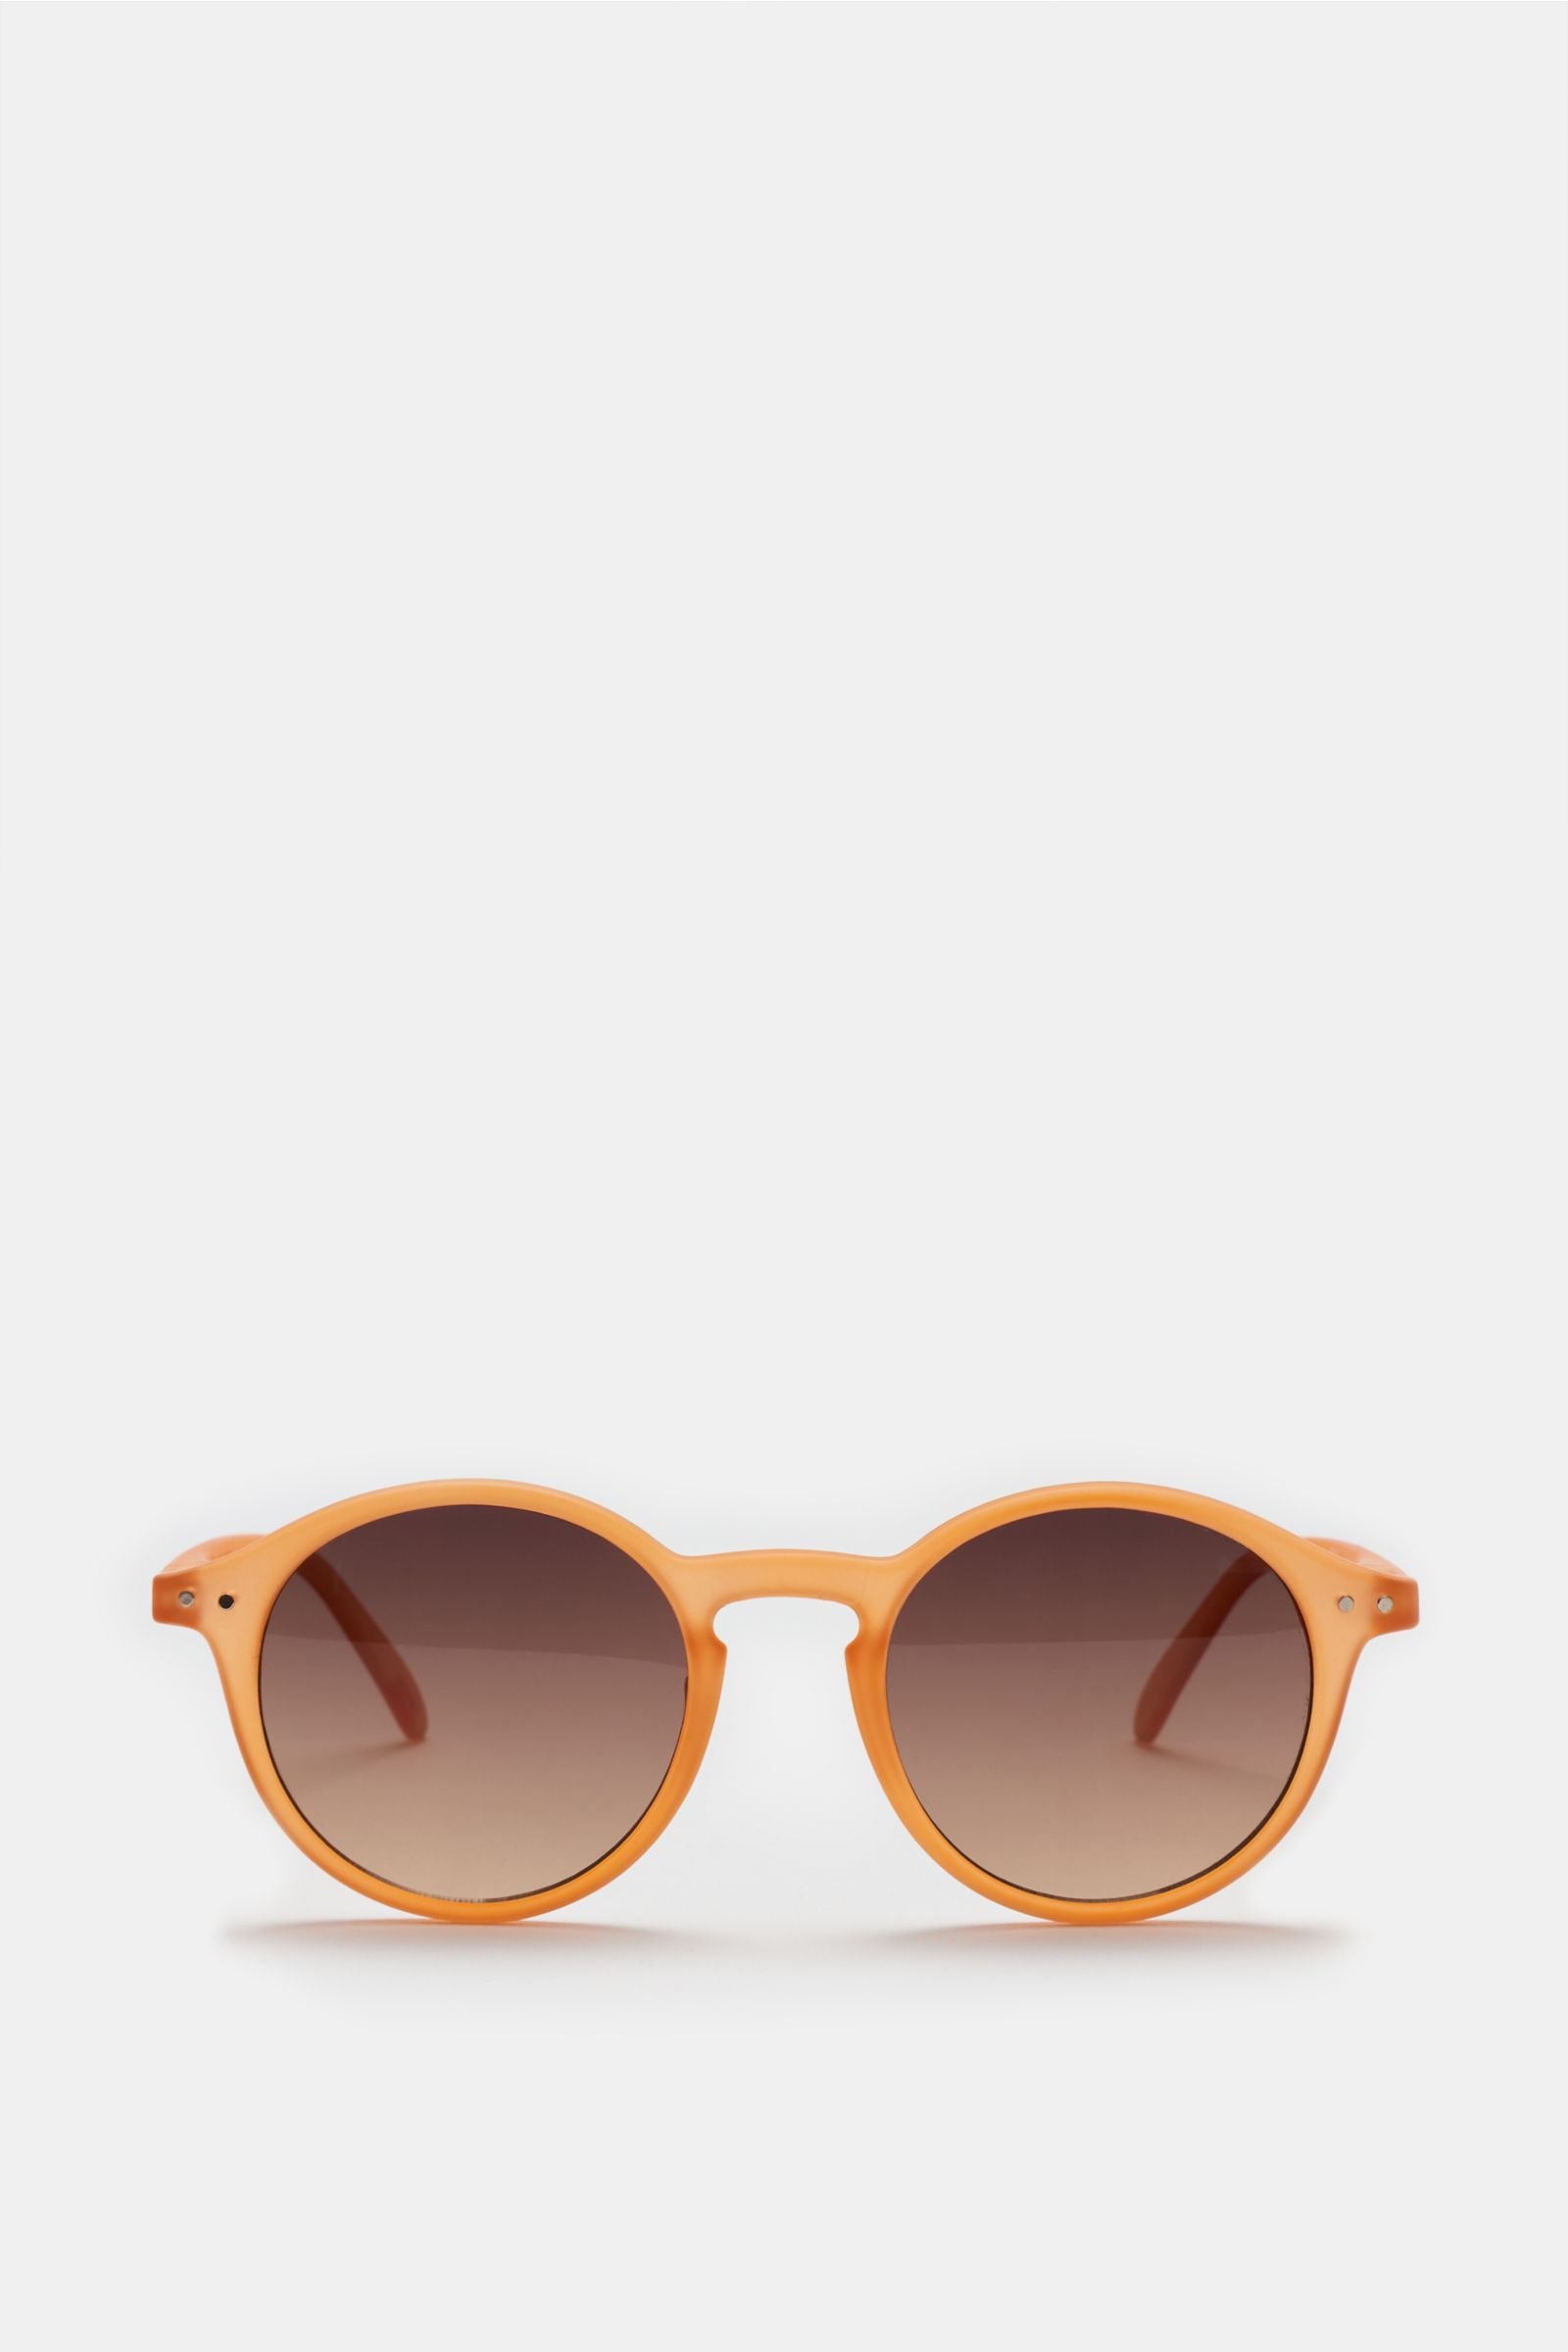 Sunglasses '#D Sun' orange/brown